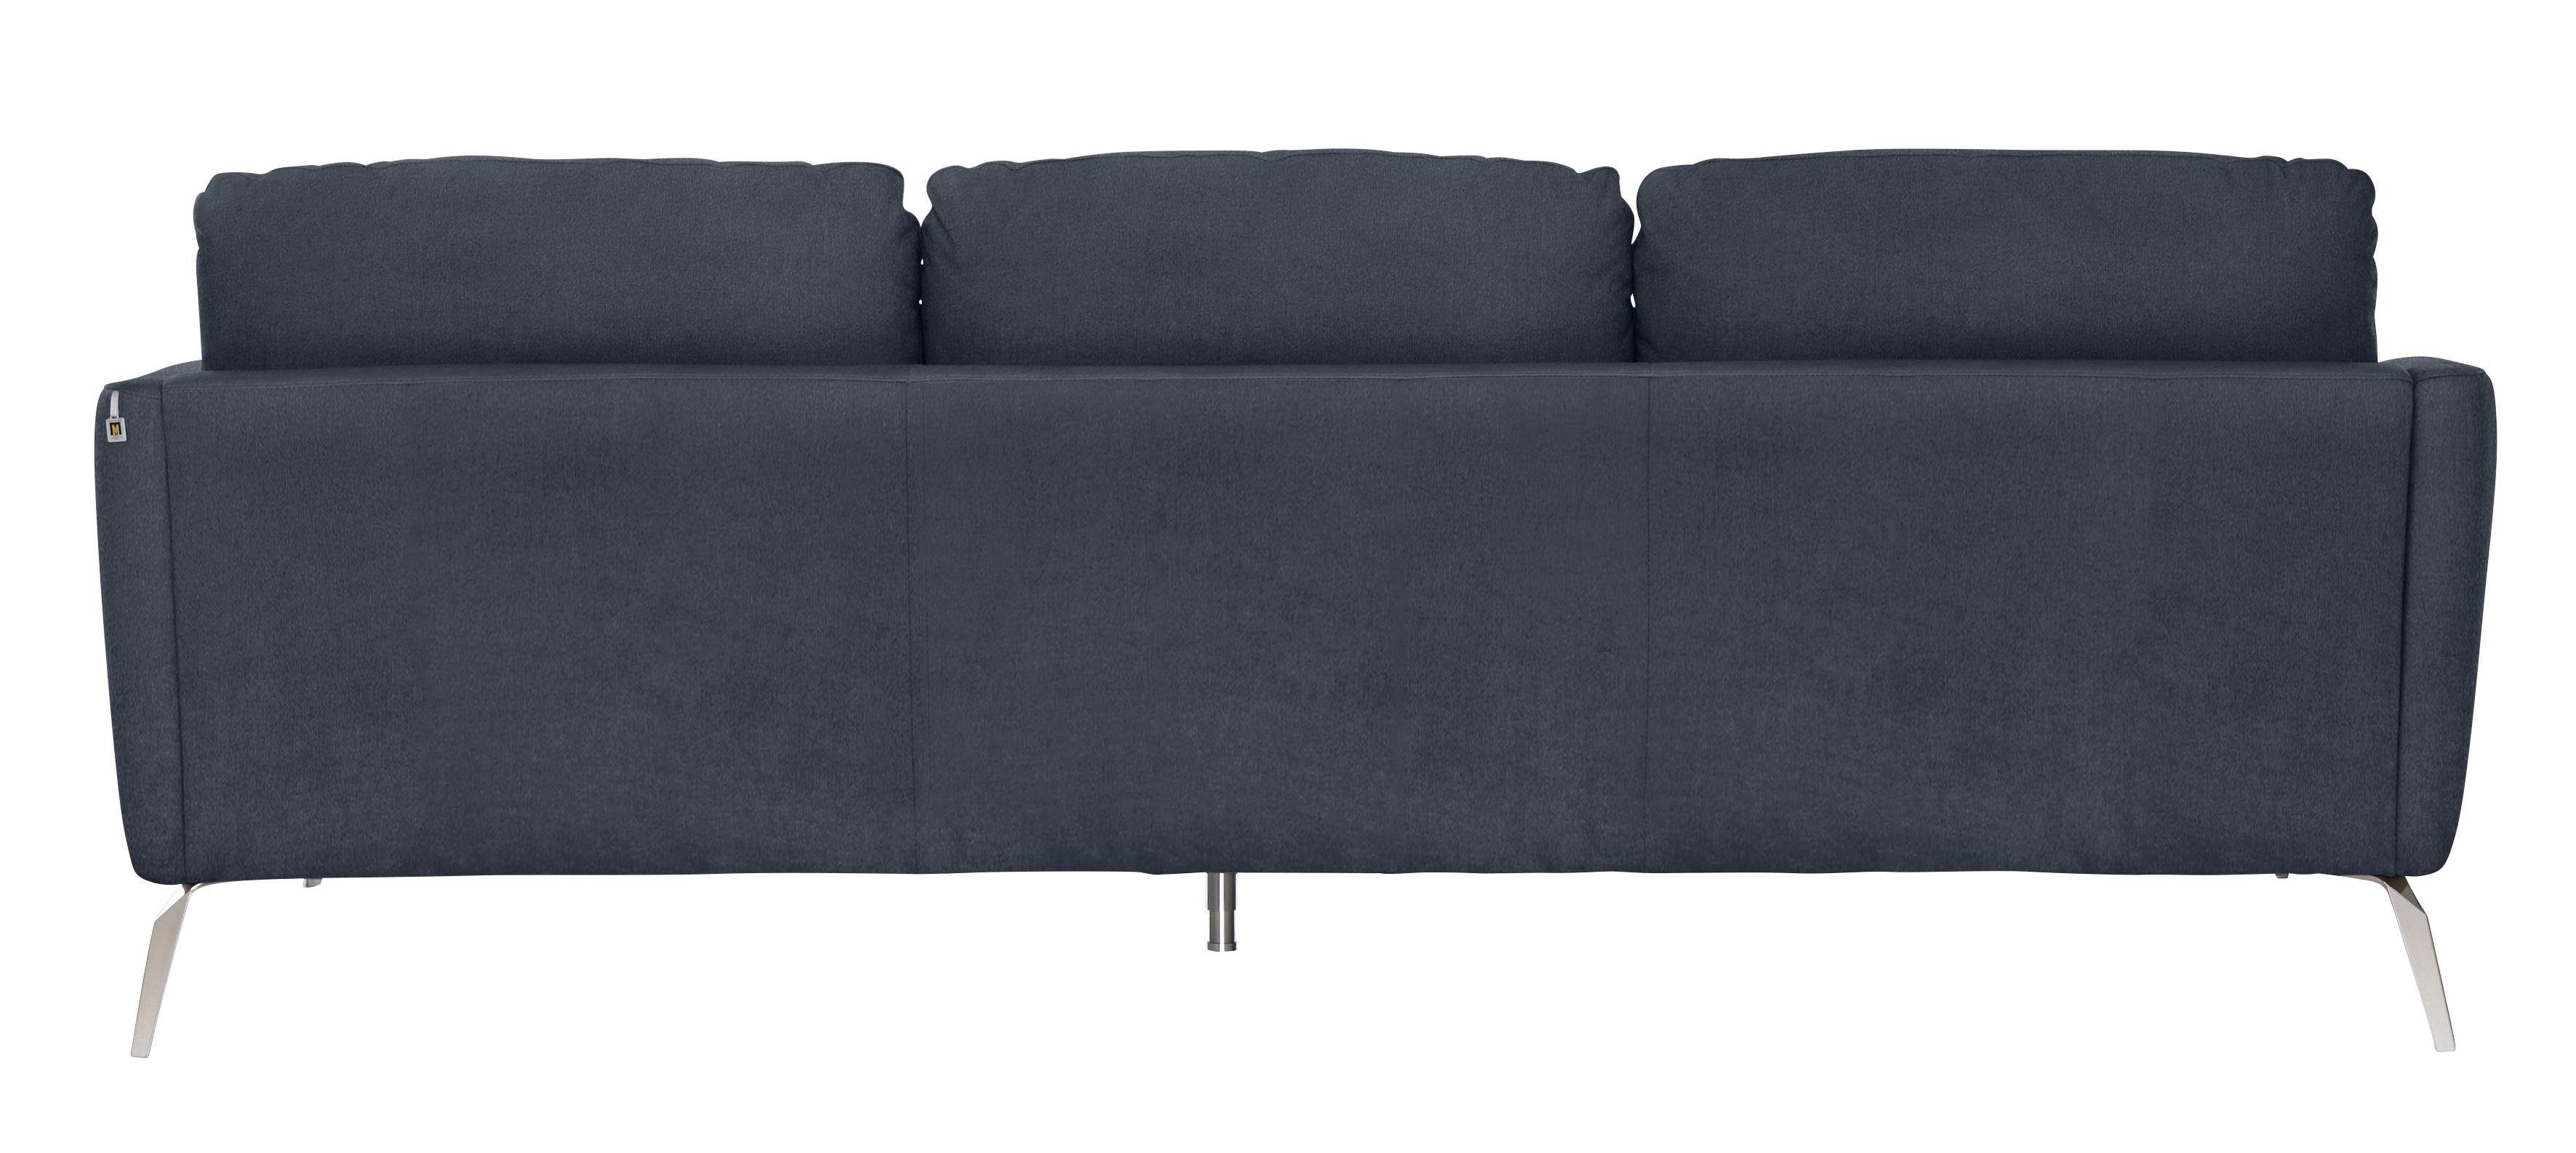 dekorativer W.SCHILLIG glänzend Big-Sofa Sitz, Chrom Füße im mit softy, Heftung